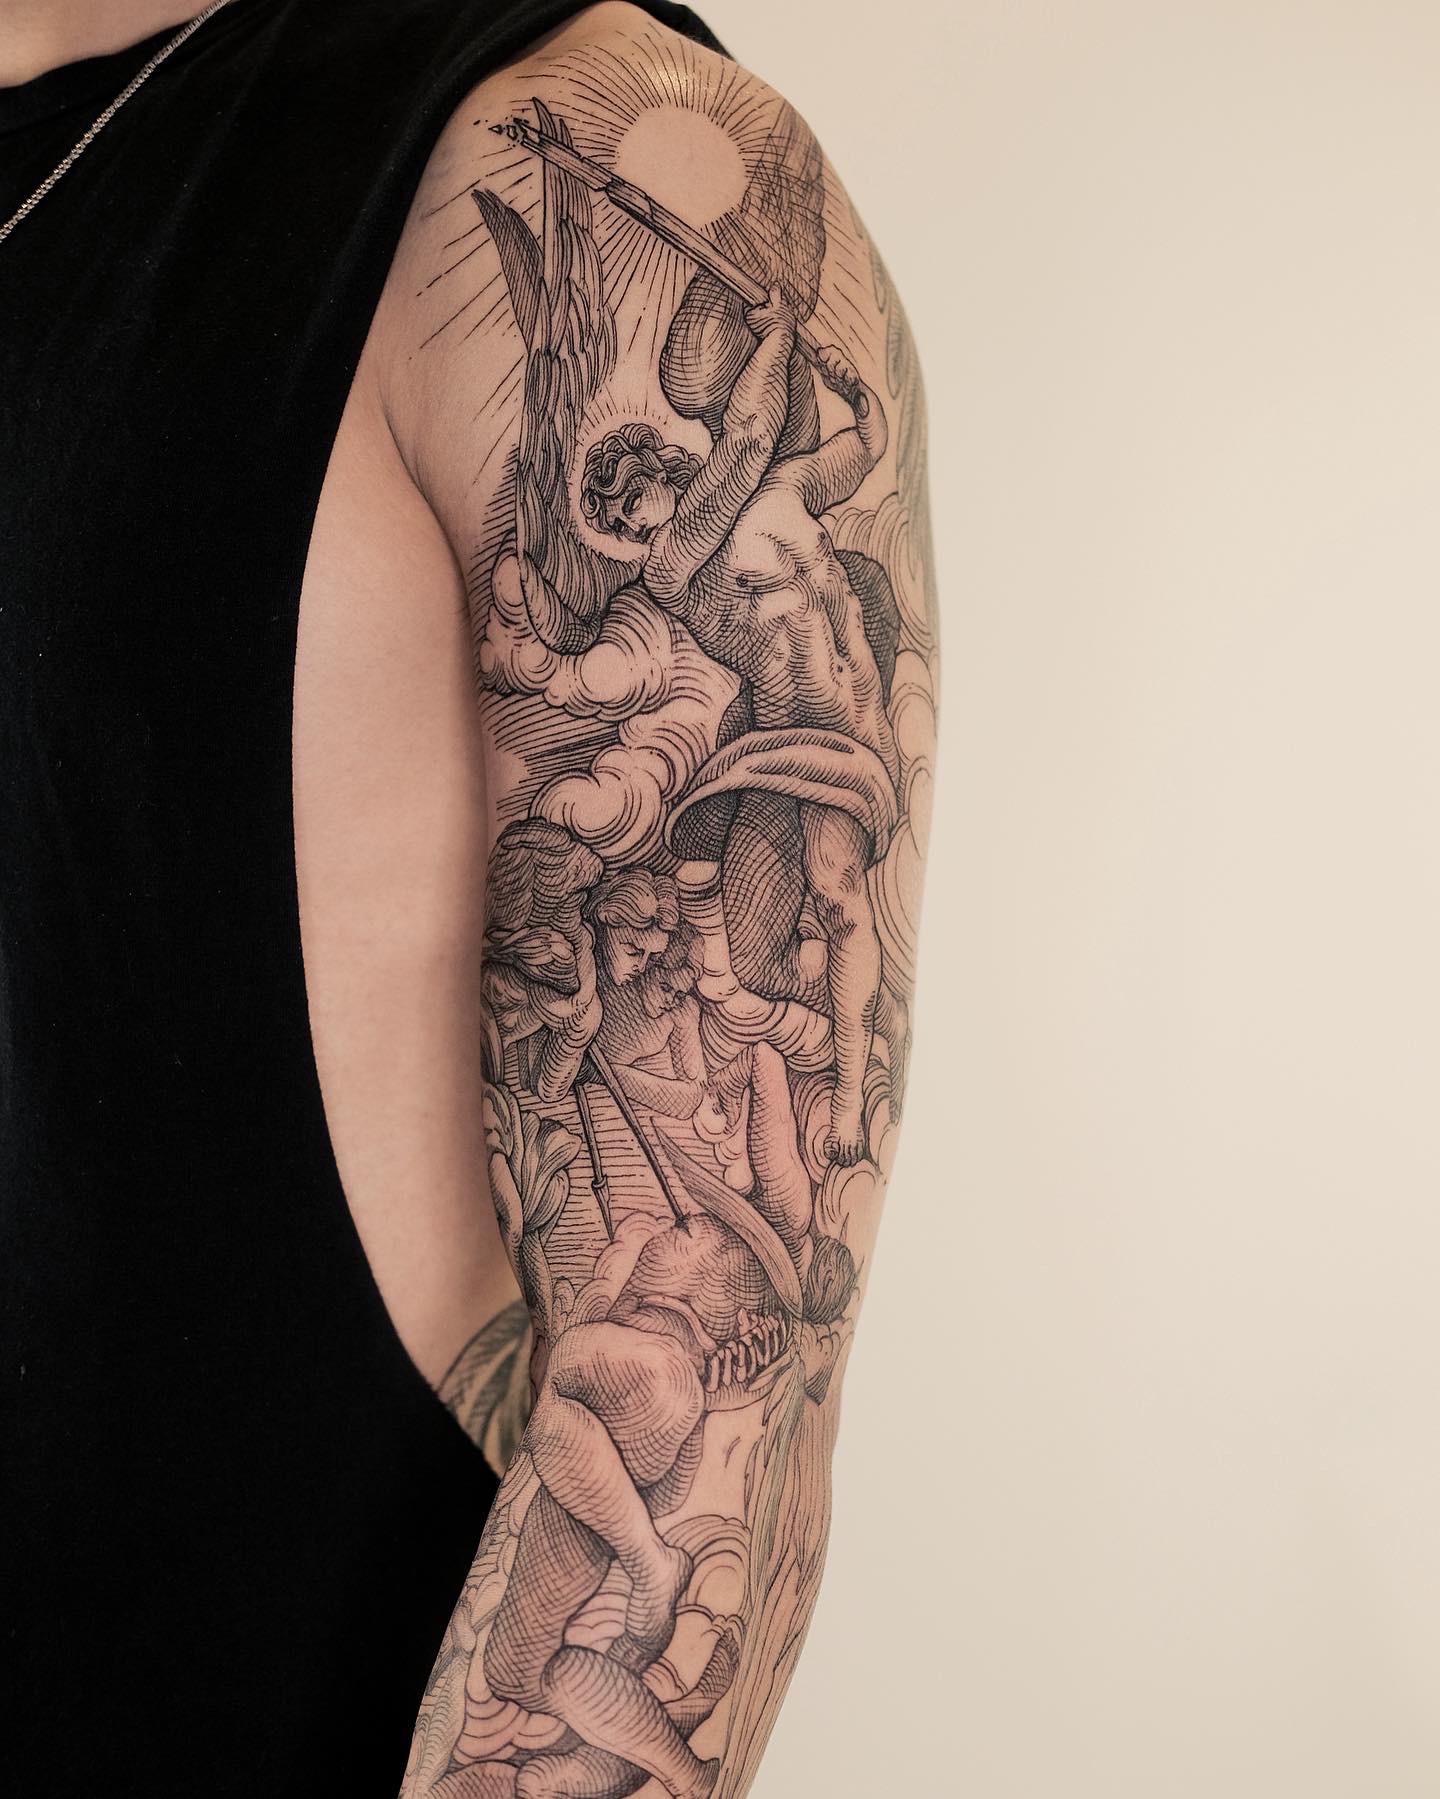 Precious Percy Jackson & the Olympians Tattoos